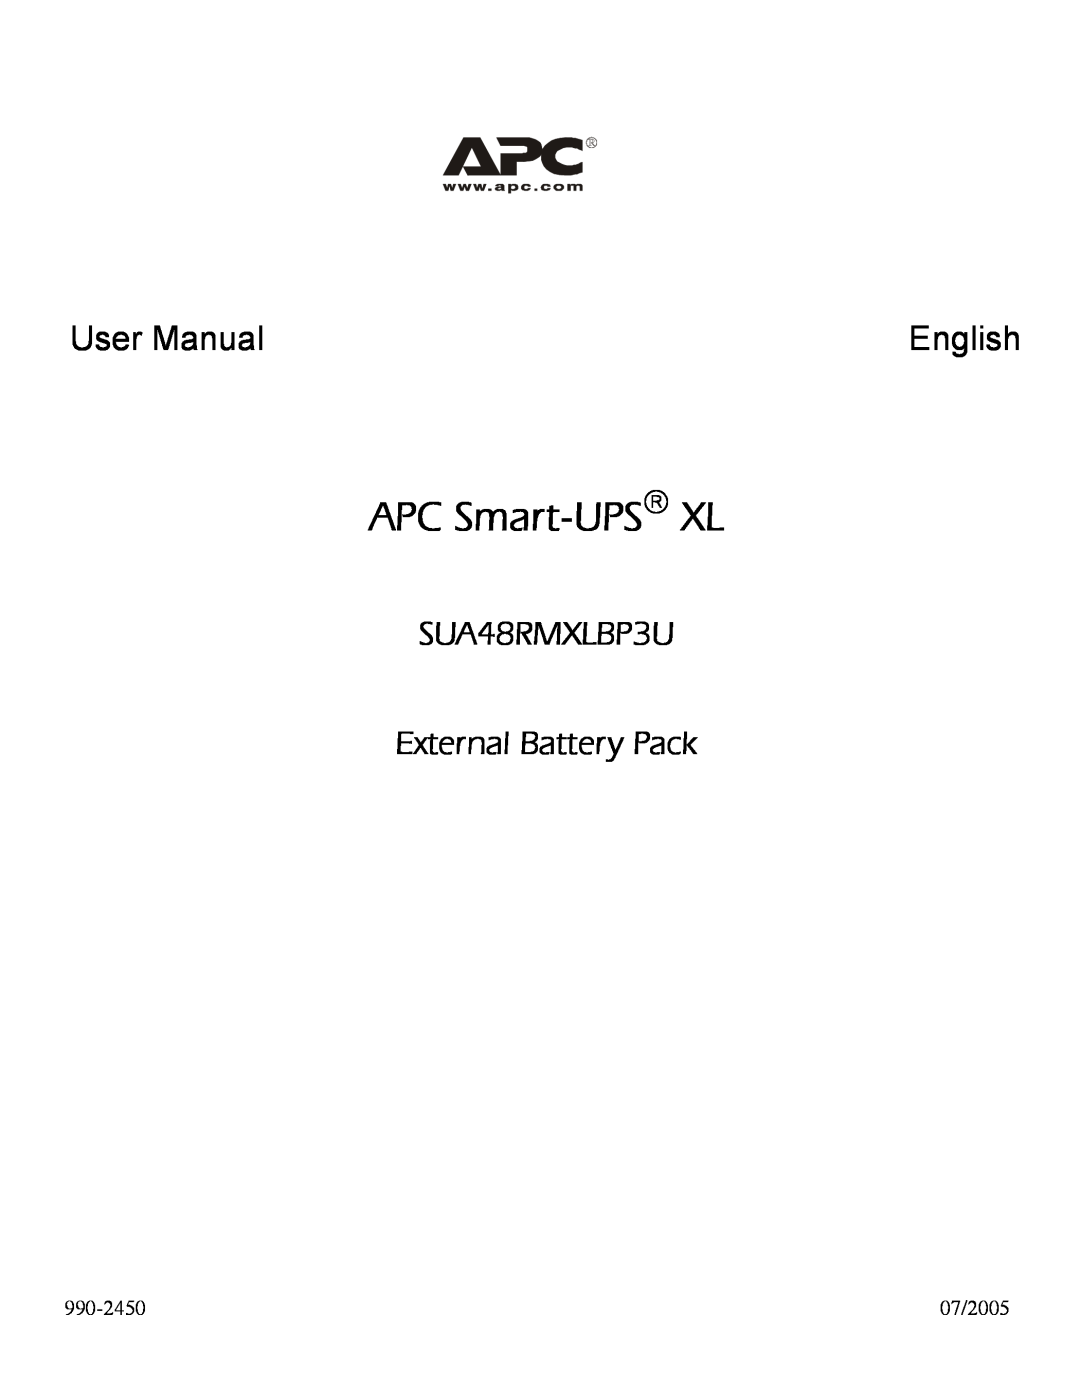 American Power Conversion SUA48RMXLBP3U user manual APC Smart-UPS XL, User Manual, English 